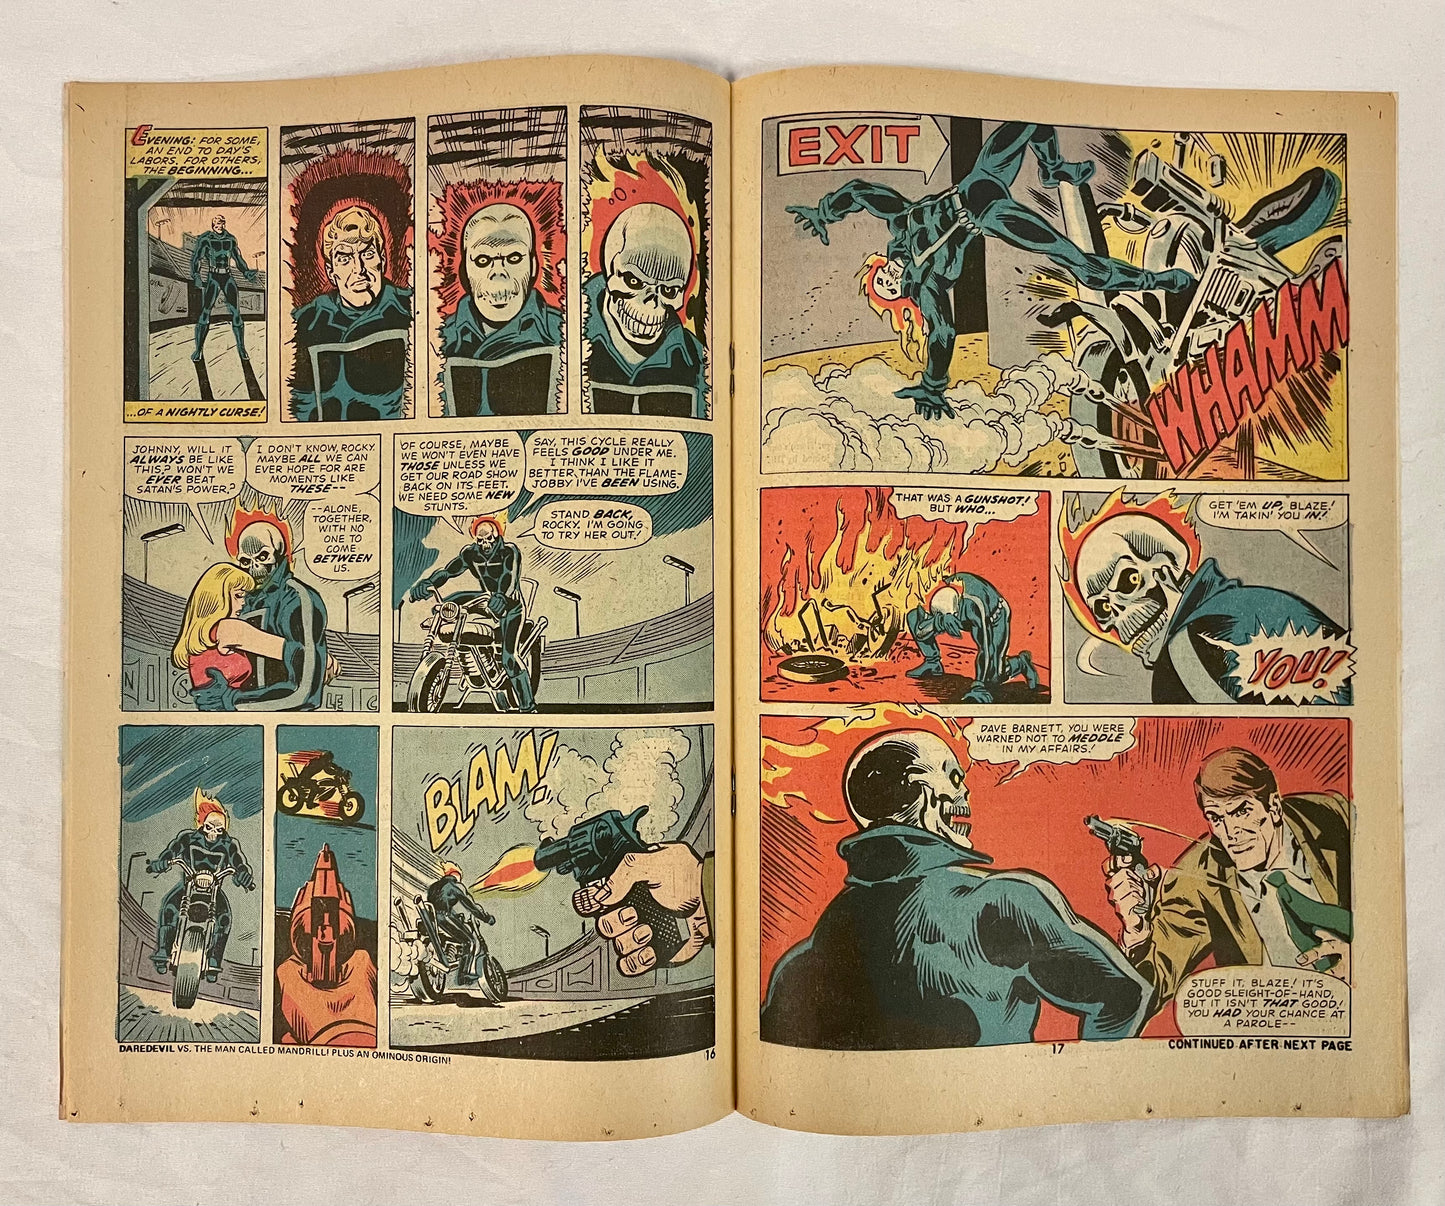 Marvel Comics Ghost Rider #6